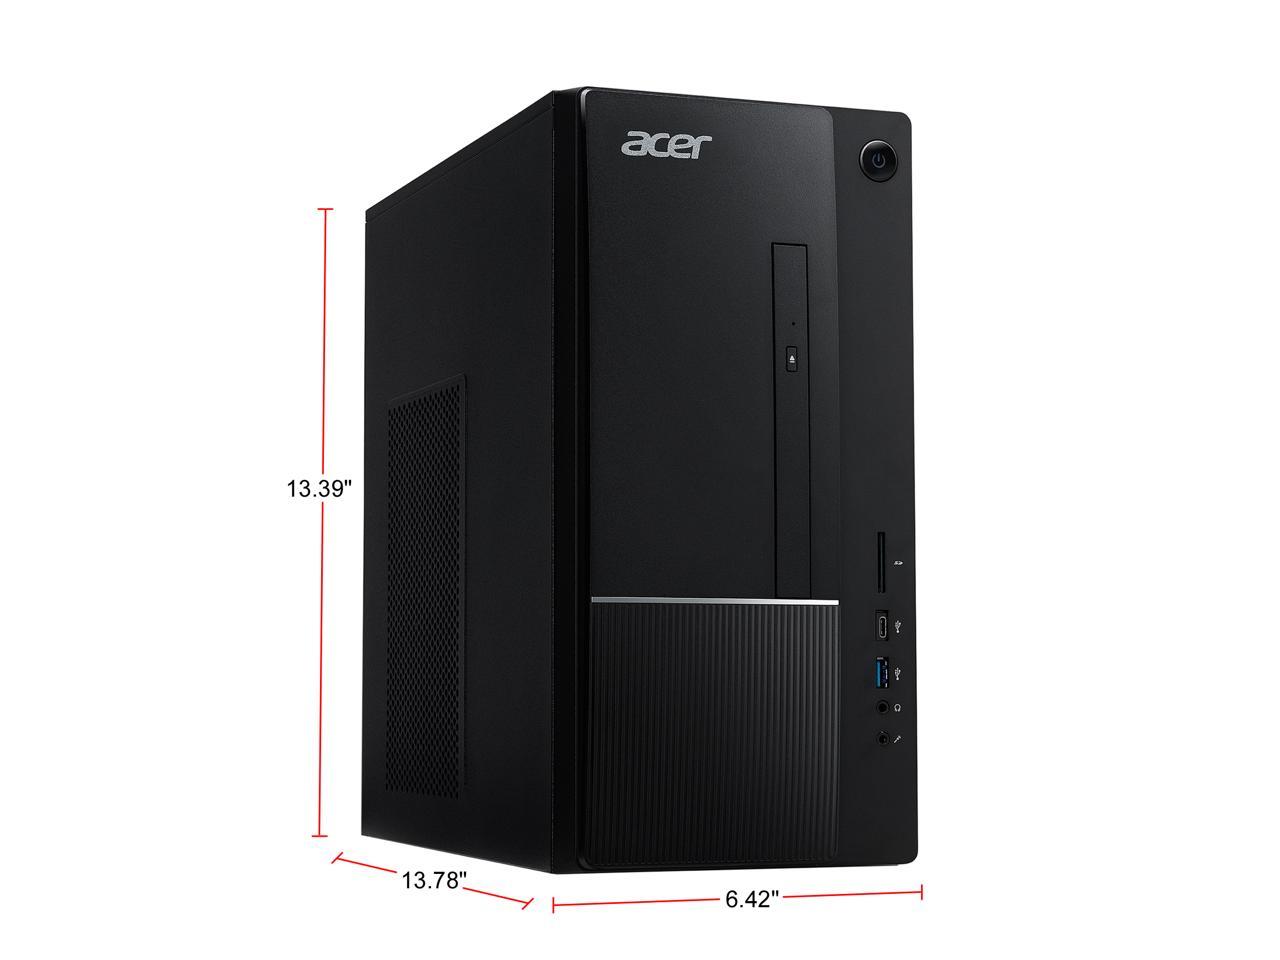 Acer Aspire TC - Intel Core i5-10400 - 8 GB DDR4 - 1 TB HDD - Intel UHD Graphics 630 - Windows 10 Home - Desktop PC (TC-875-UR12)